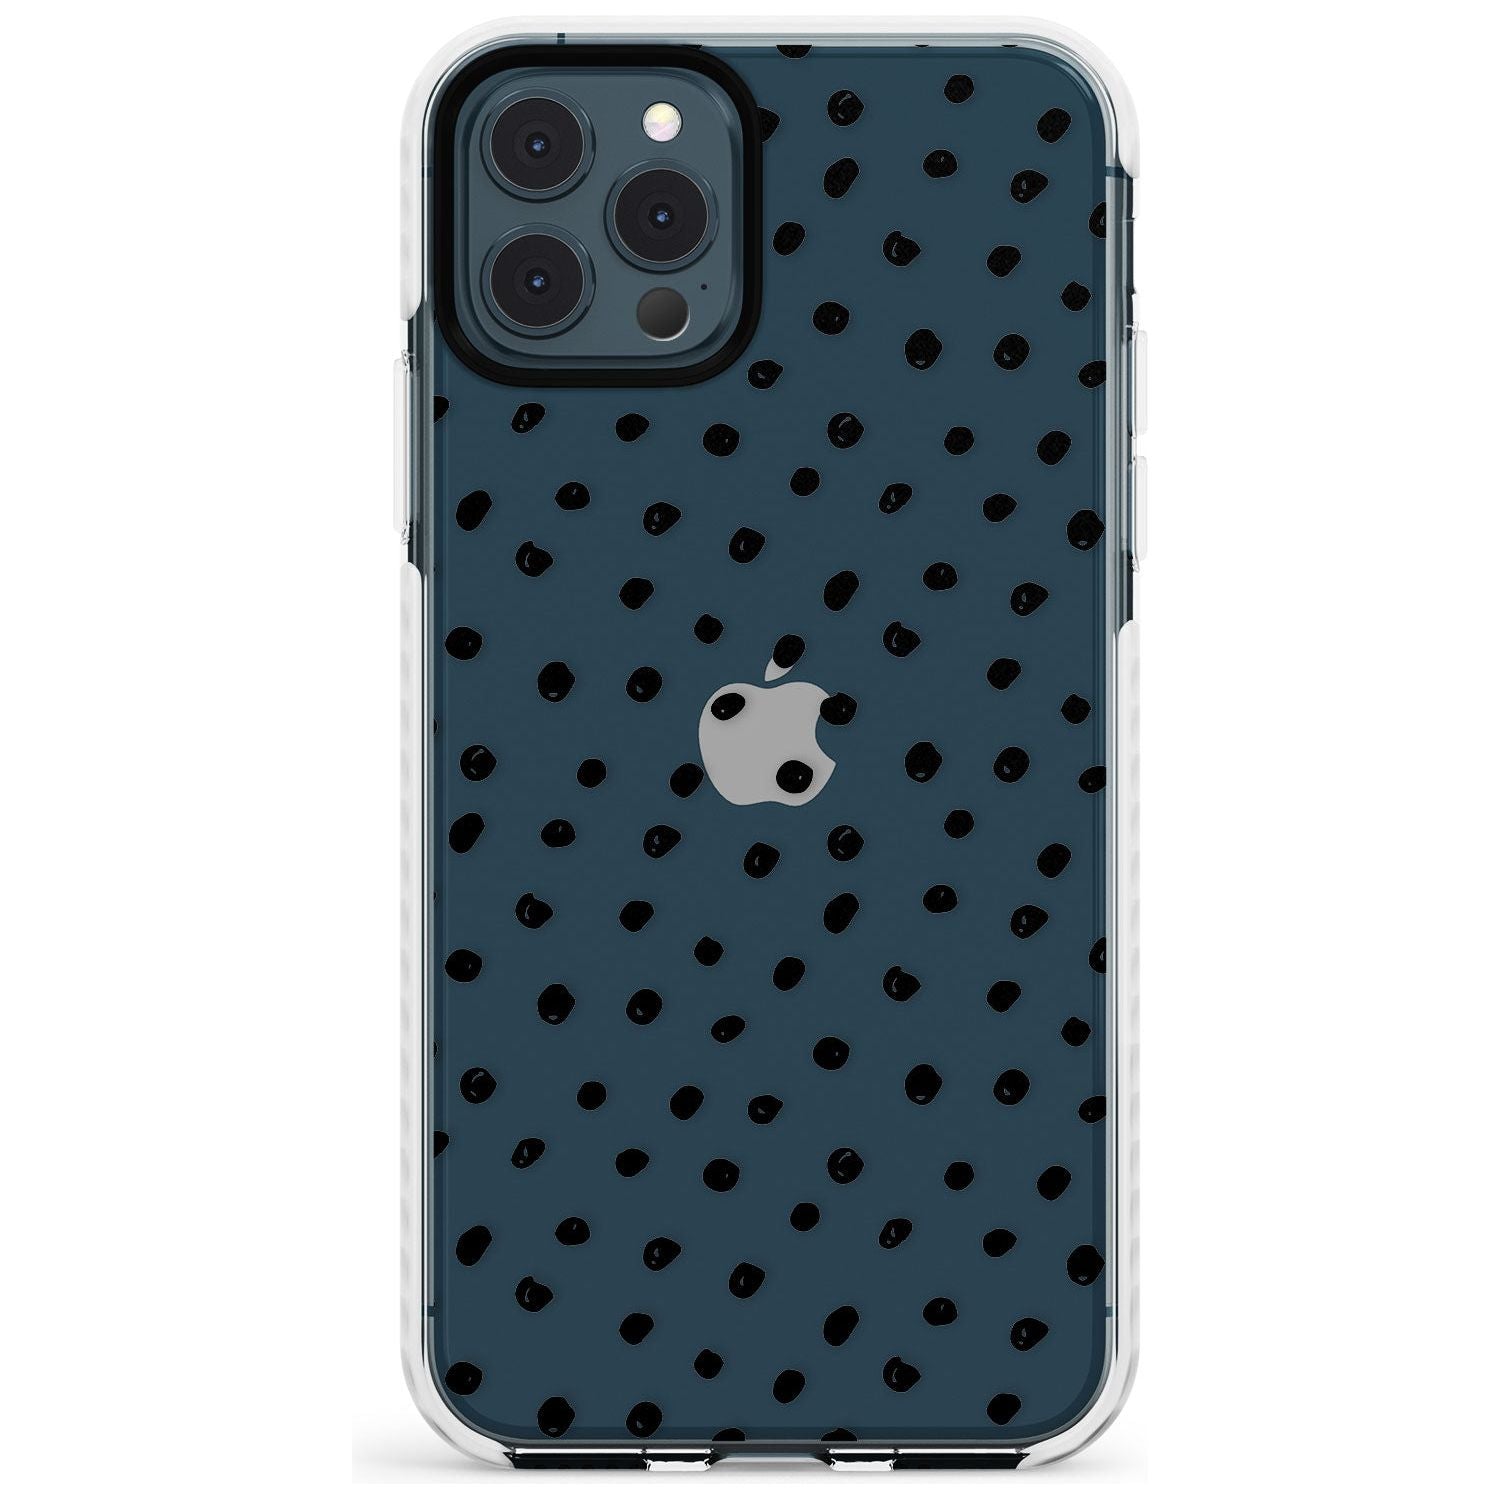 Messy Black Dot Pattern Slim TPU Phone Case for iPhone 11 Pro Max